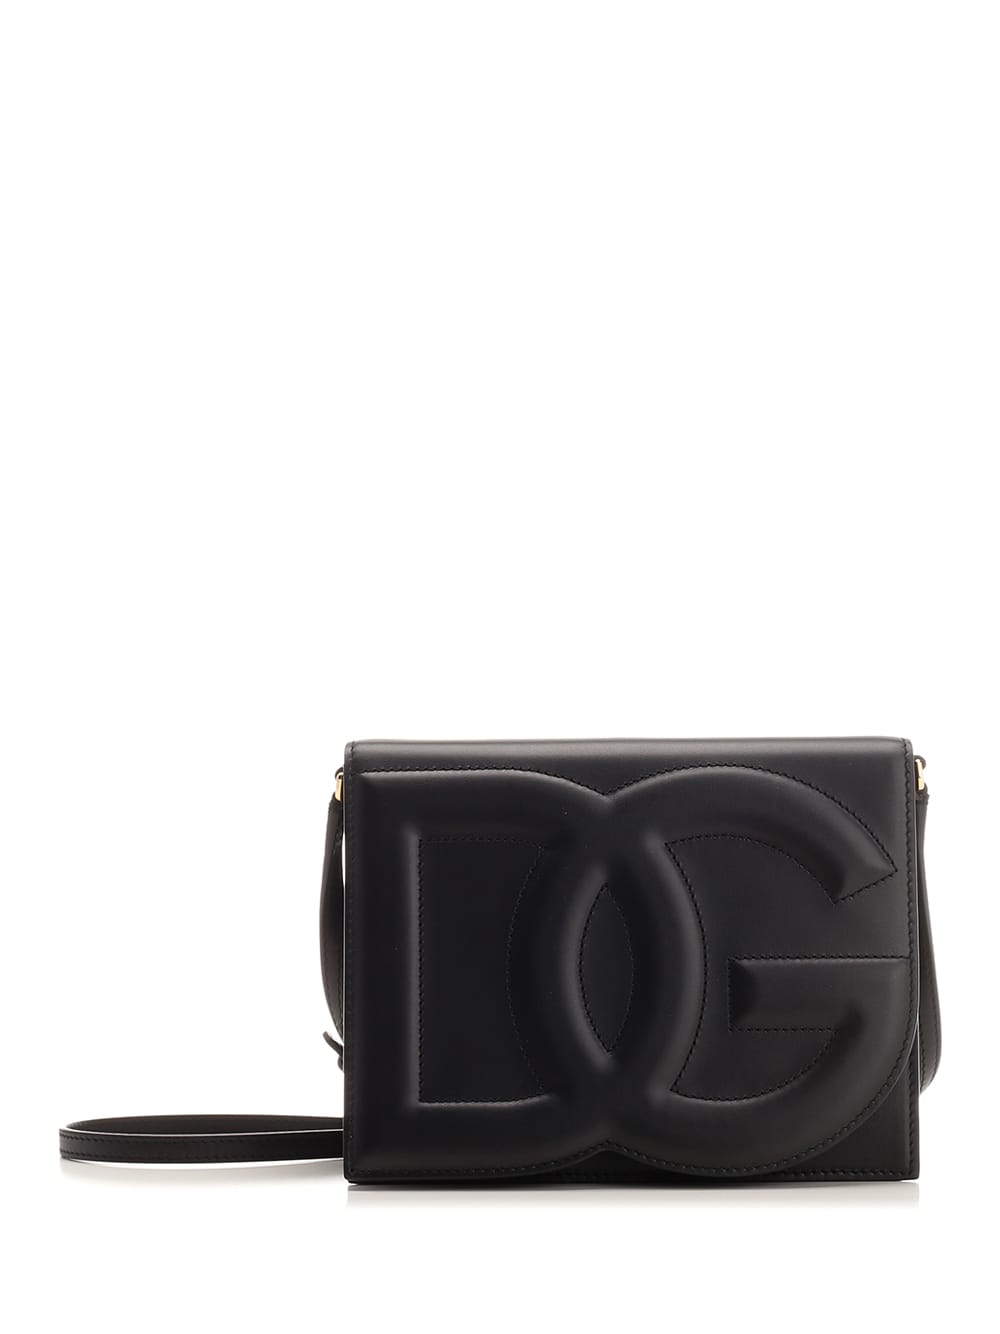 Dolce & Gabbana dg Cross-body Bag